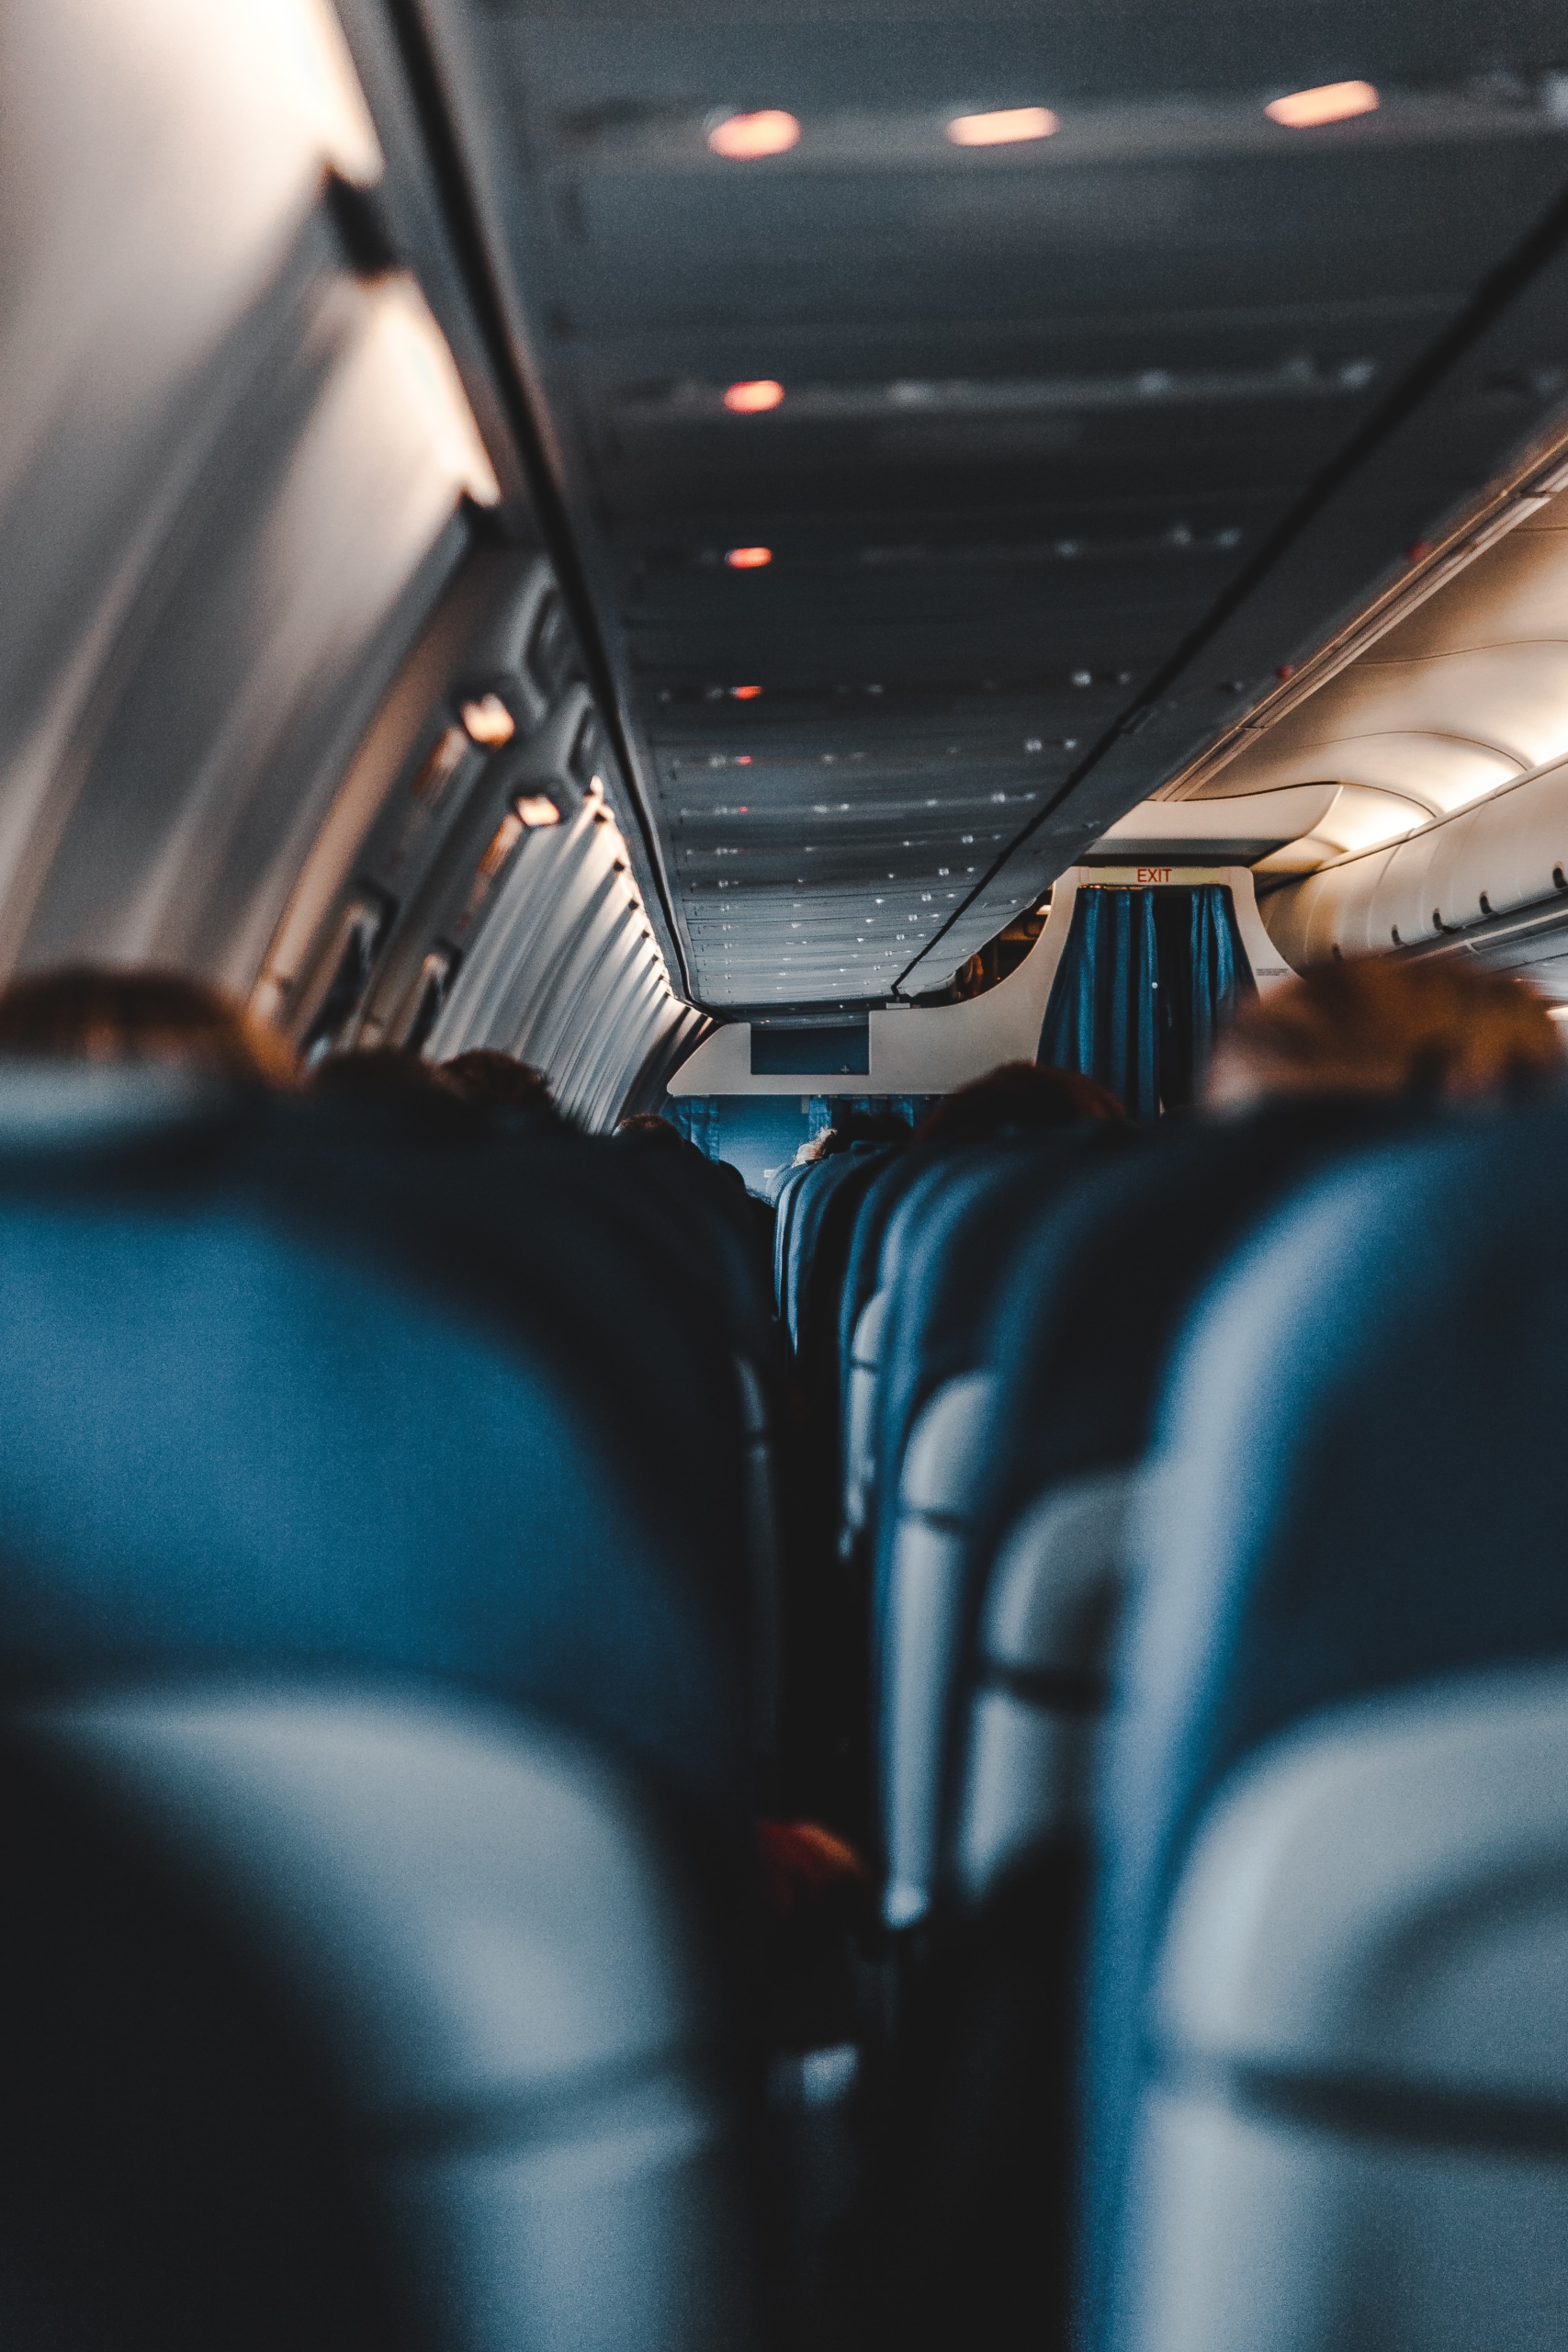 Passanger seats in plane